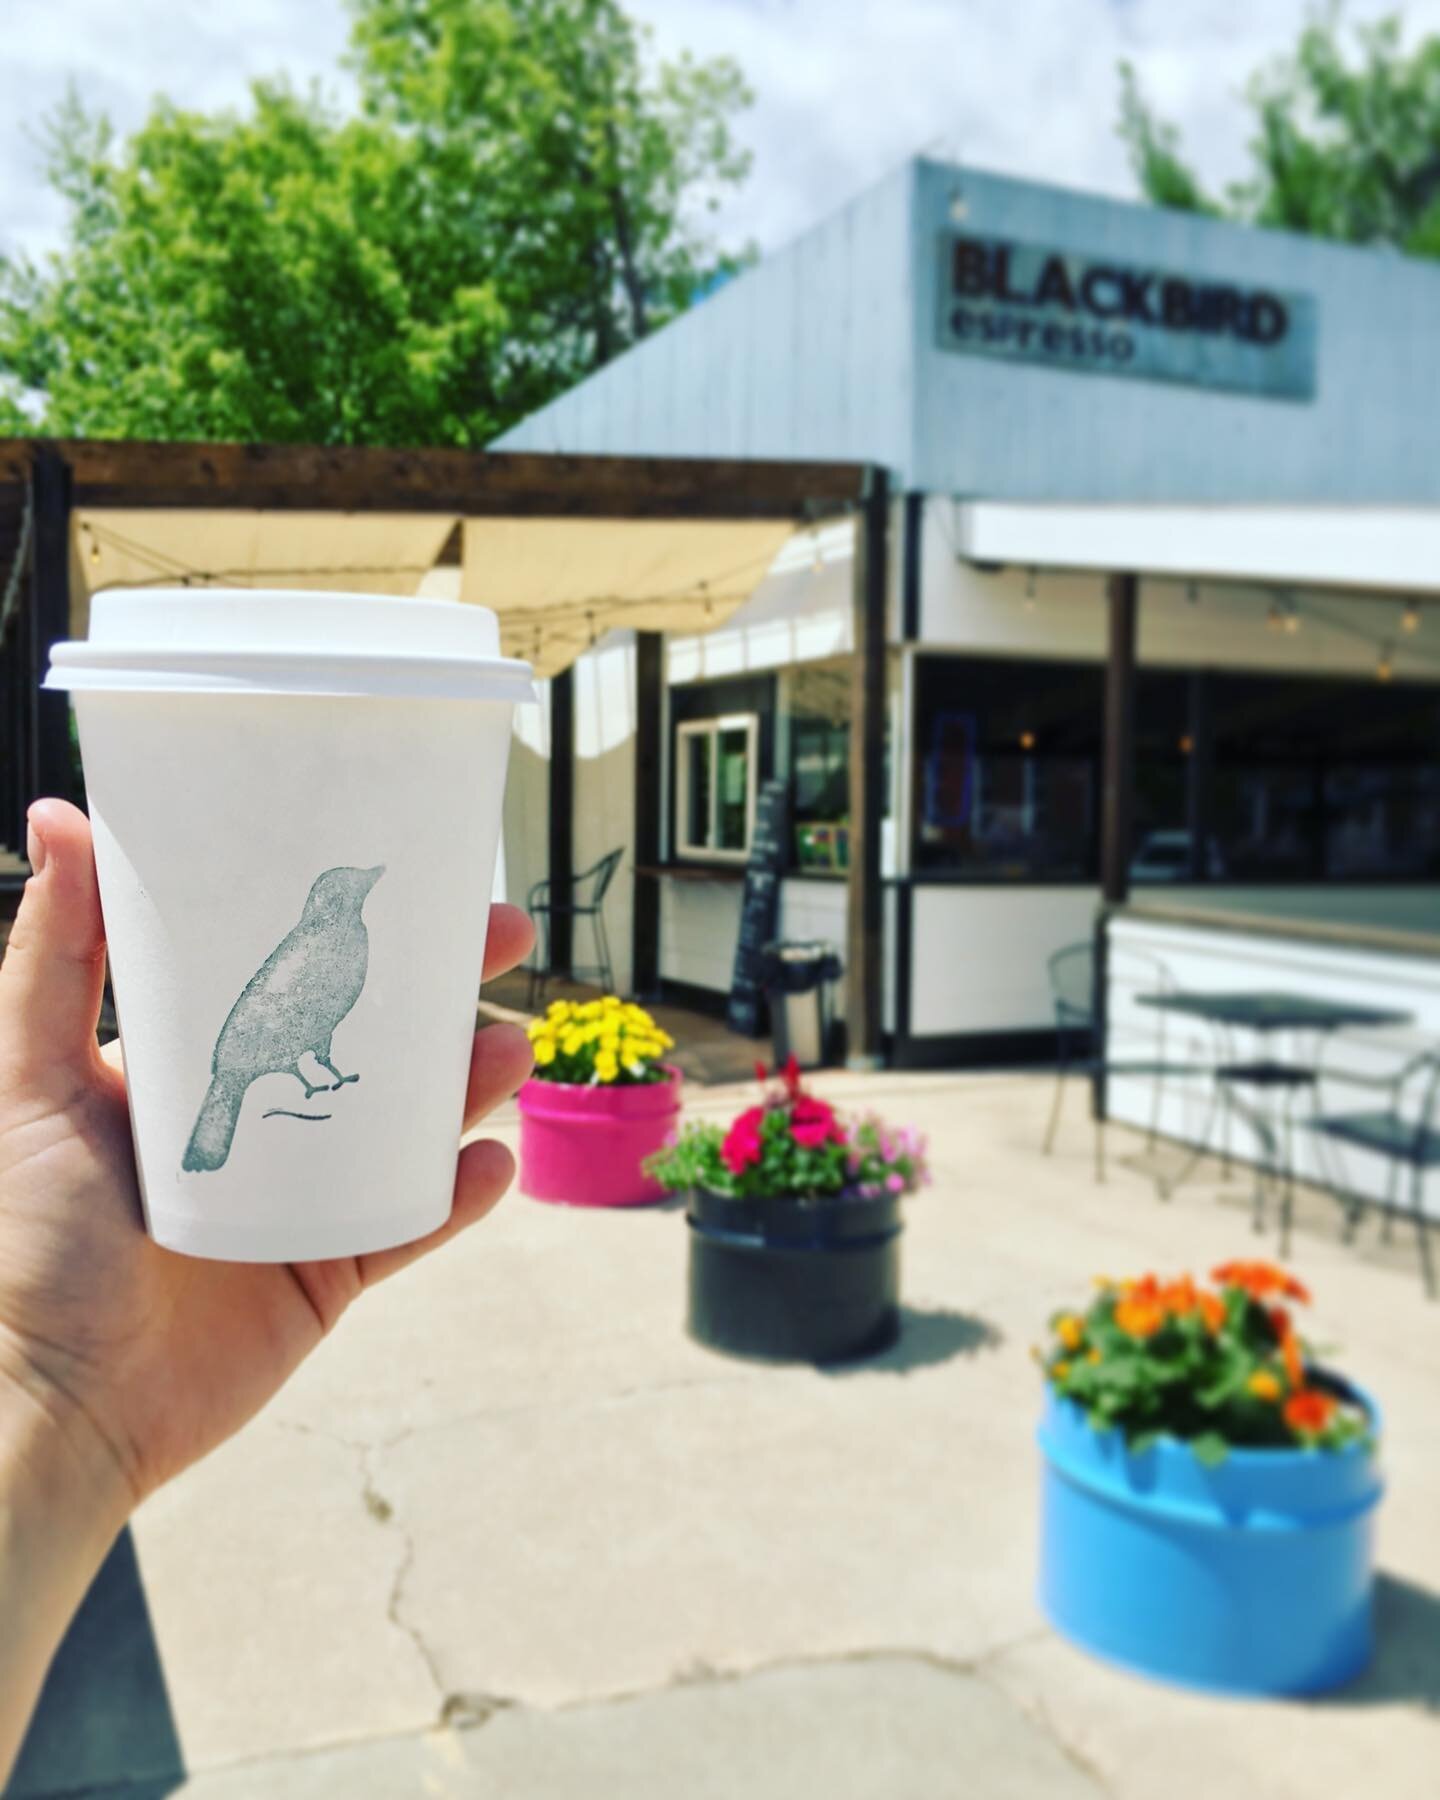 Blackbird Espresso - Spearfish, South Dakota